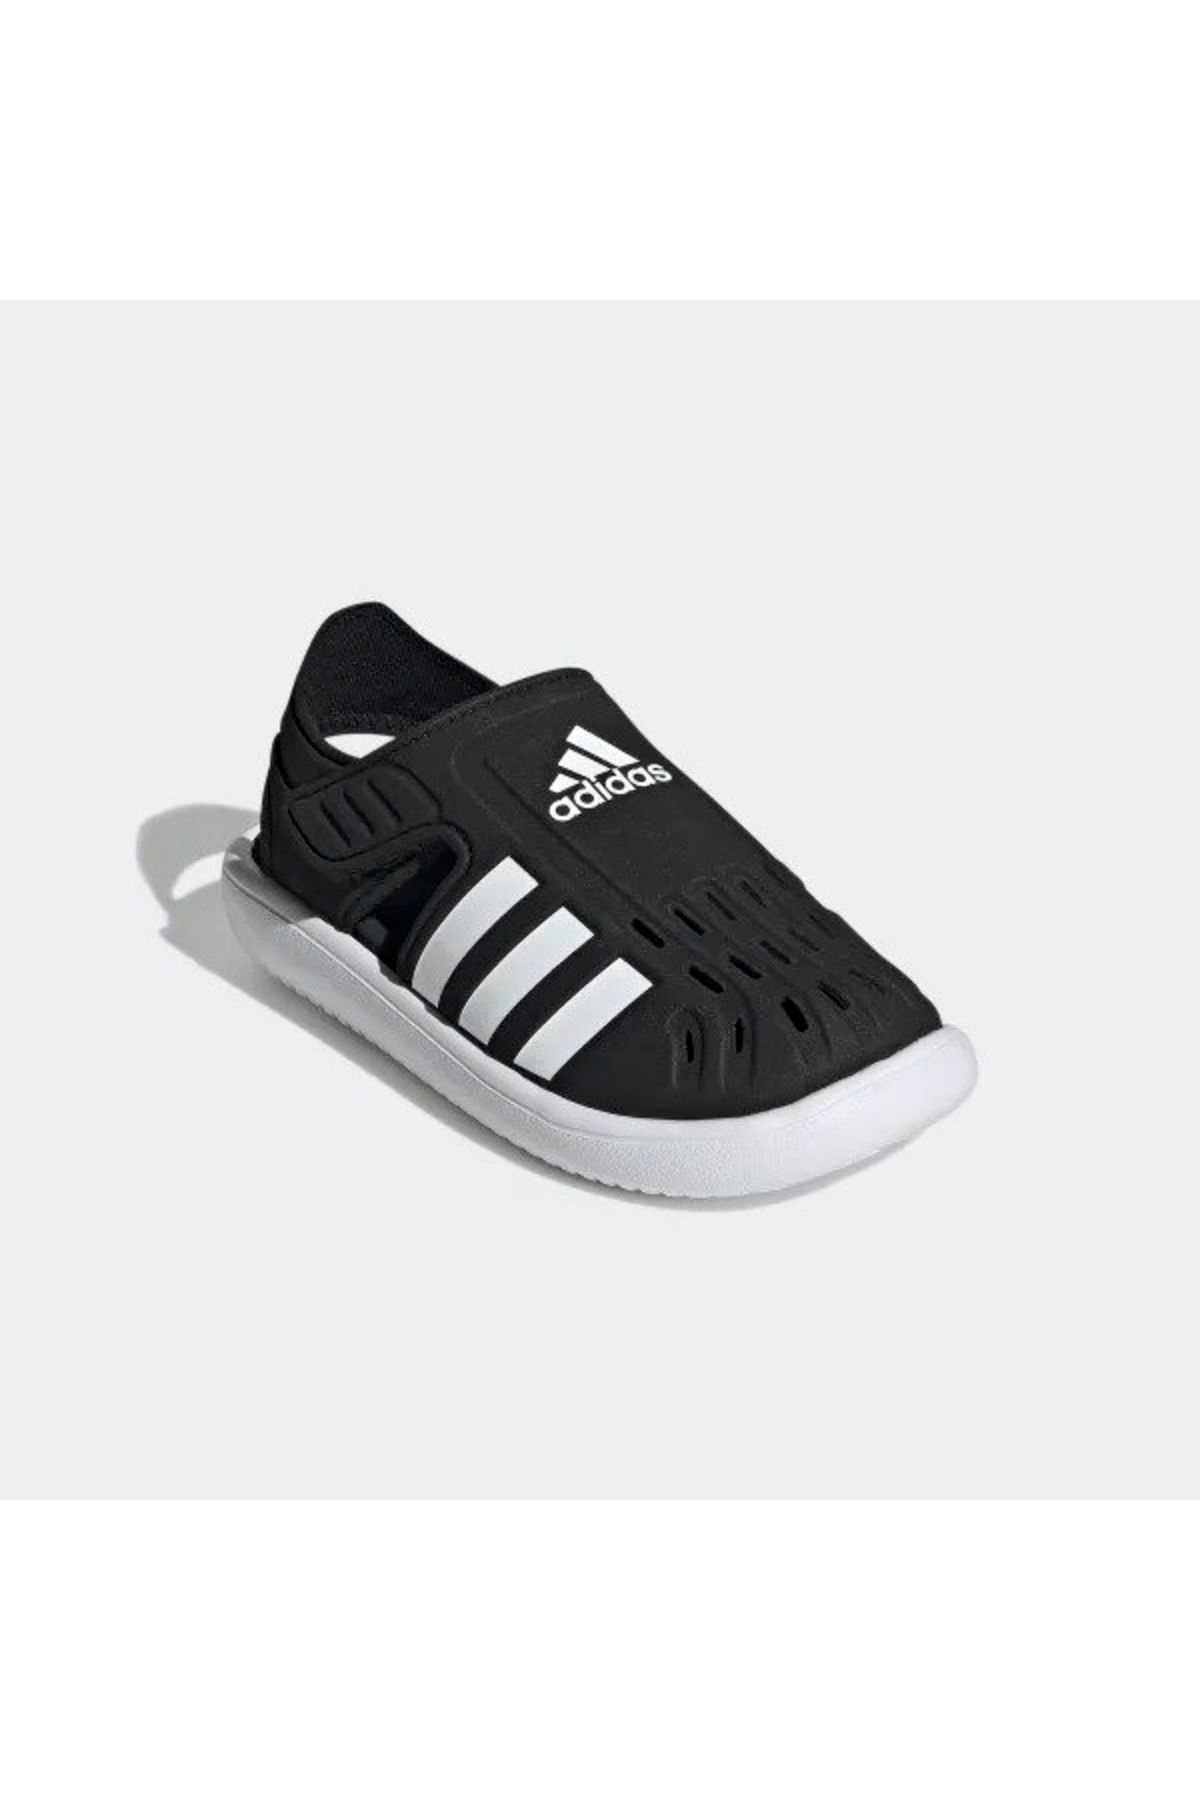 adidas Summer Closed Toe Water Sandalet Gw0384